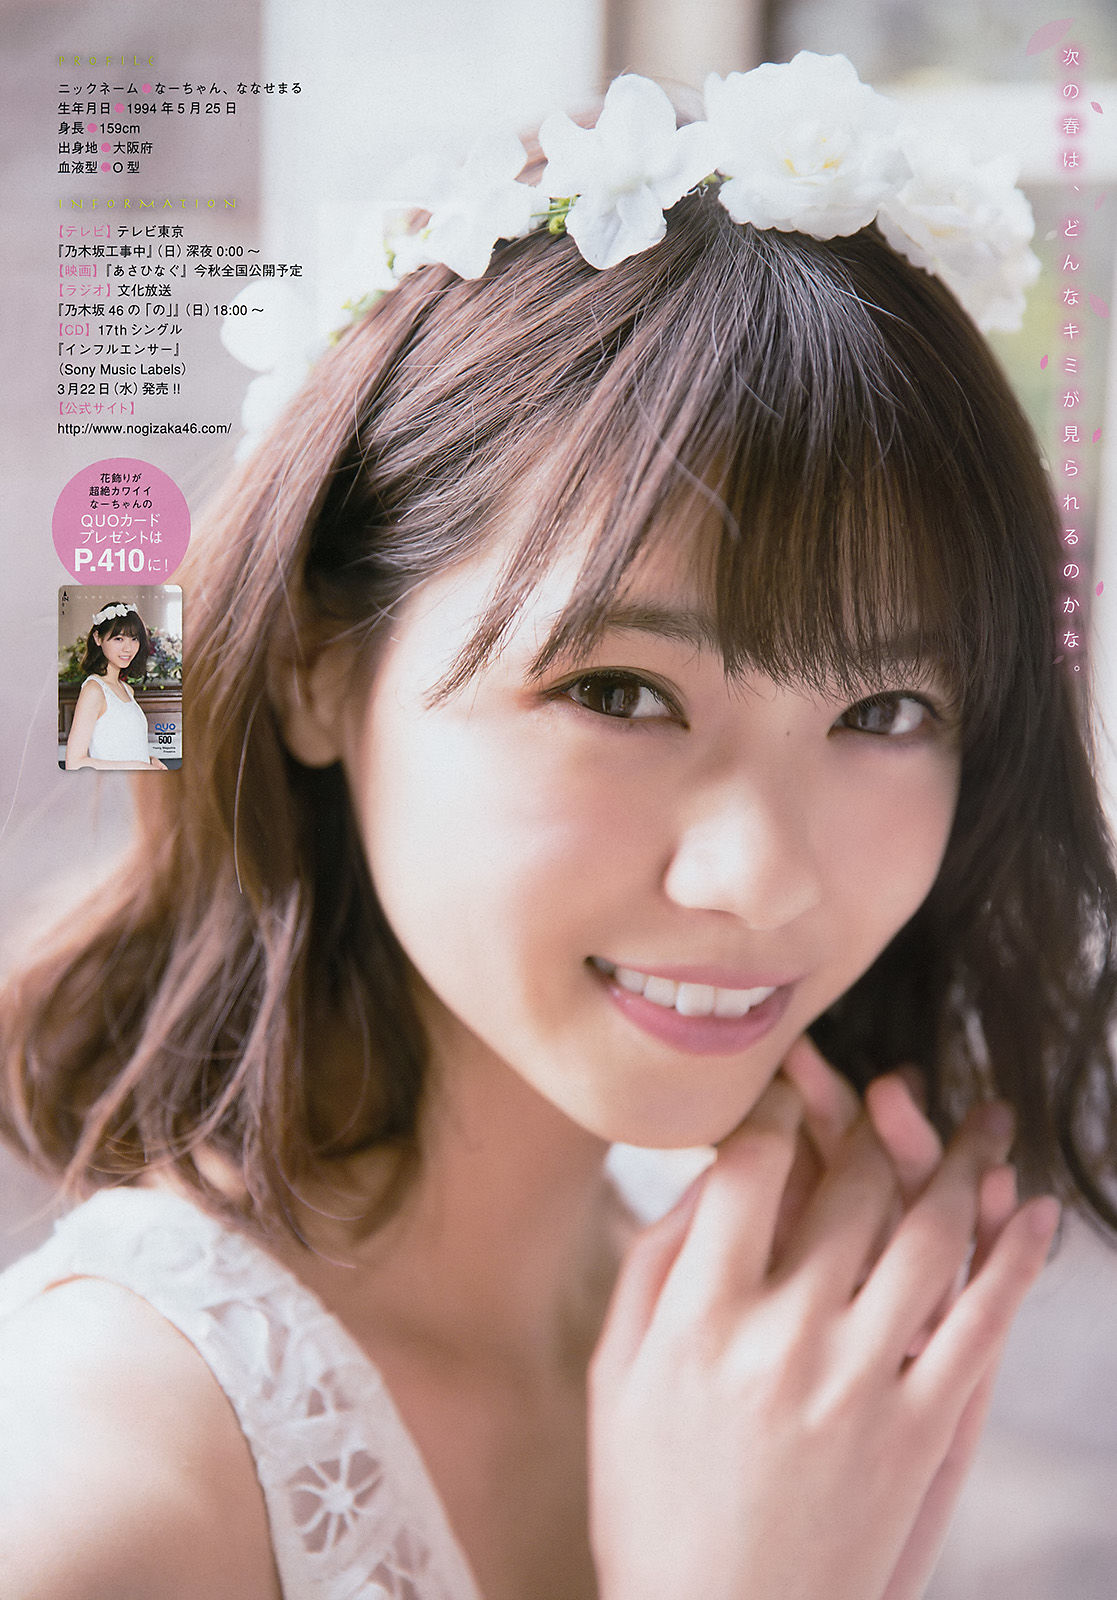 [Young Magazine] 2017年No.15 西野七瀬 松永有紗